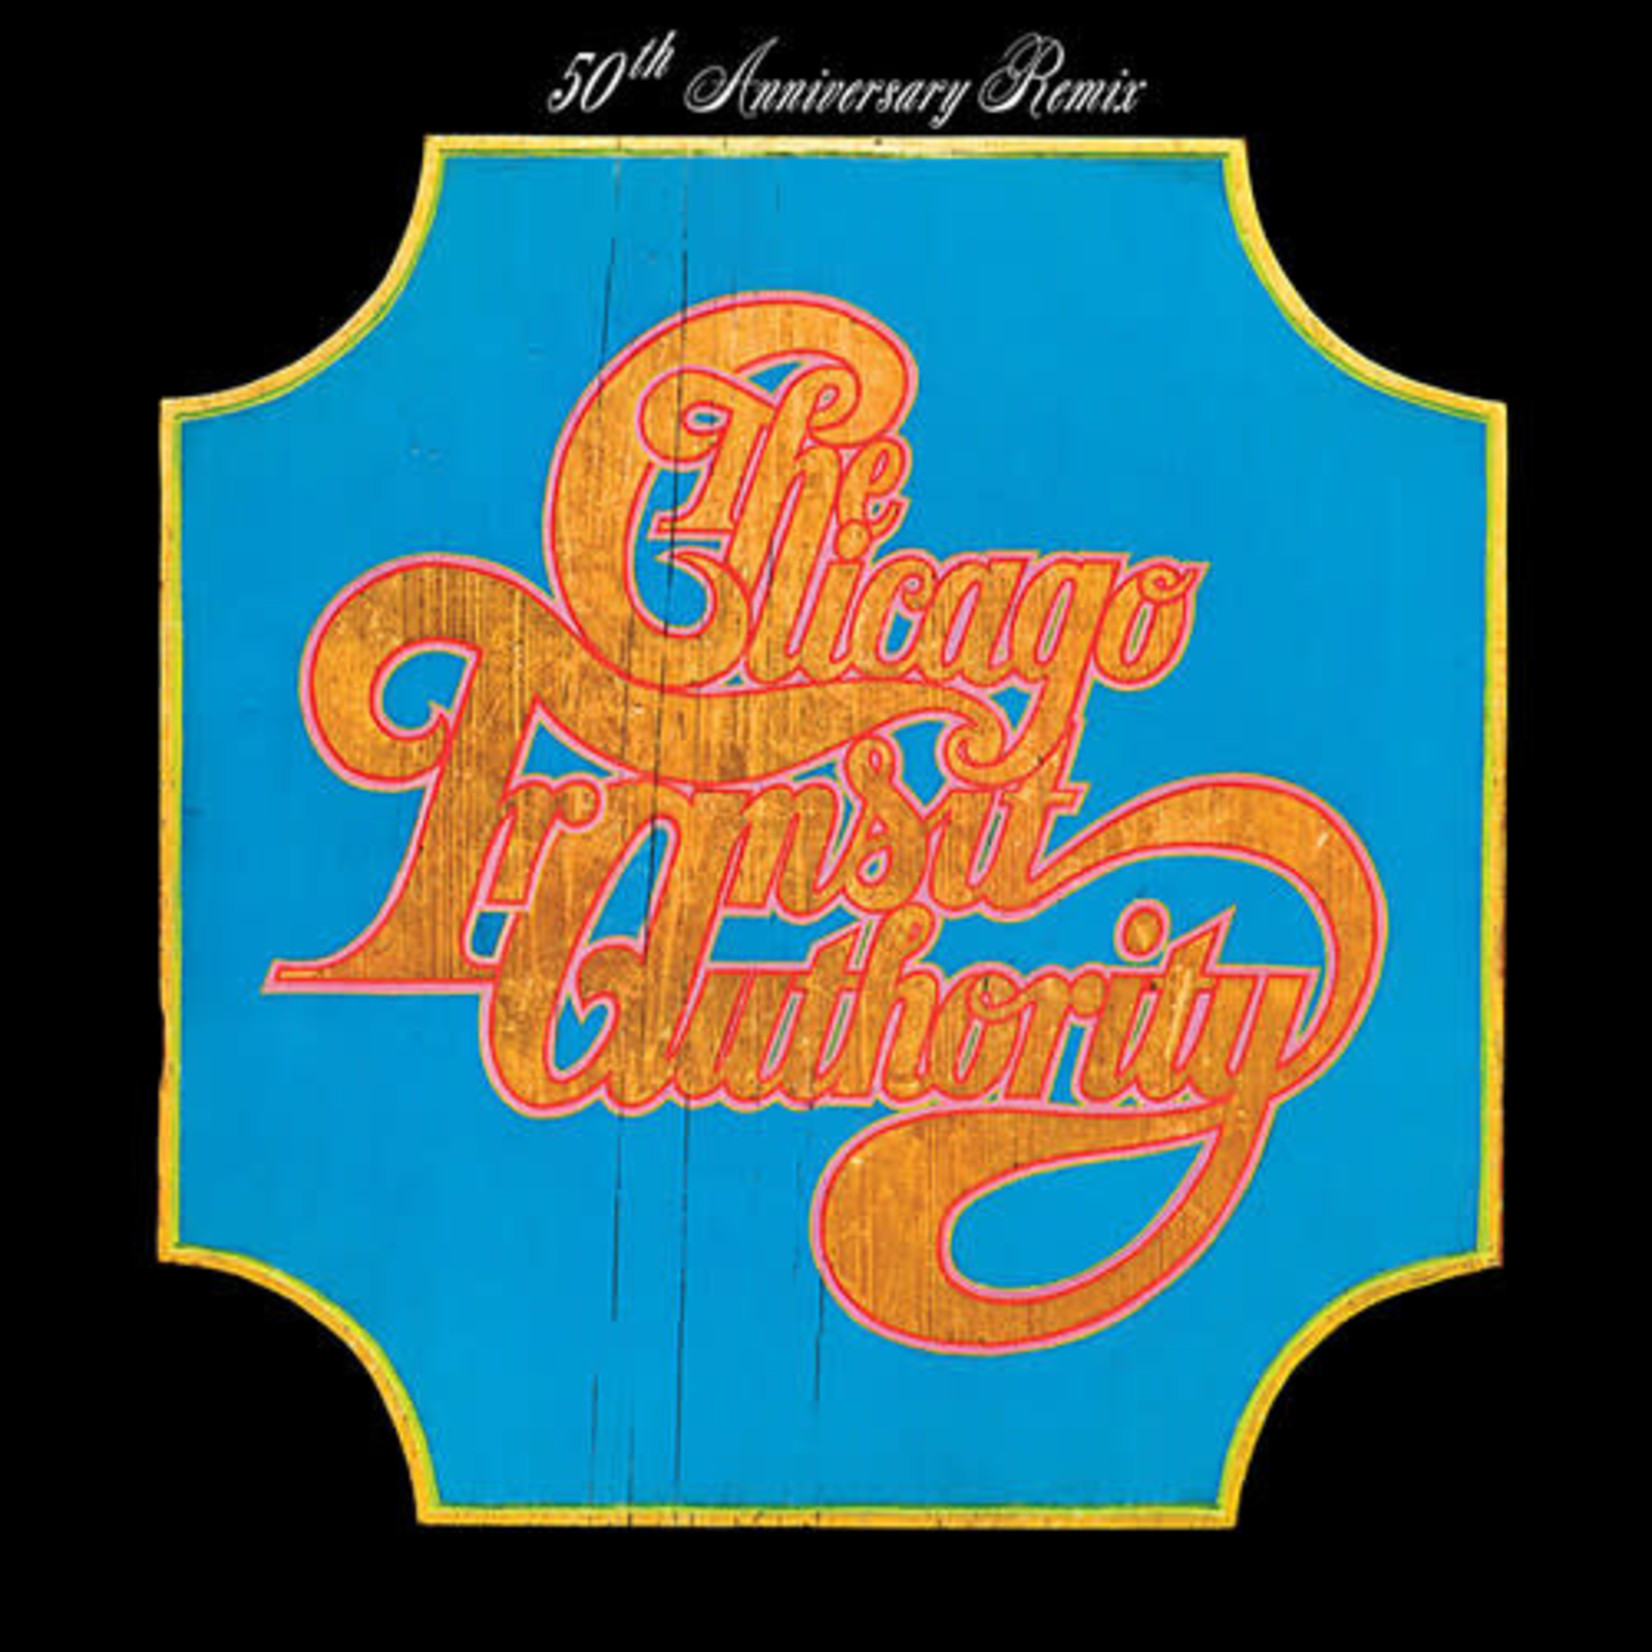 Chicago - Chicago Transit Authority (50th Ann Ed) [LP]